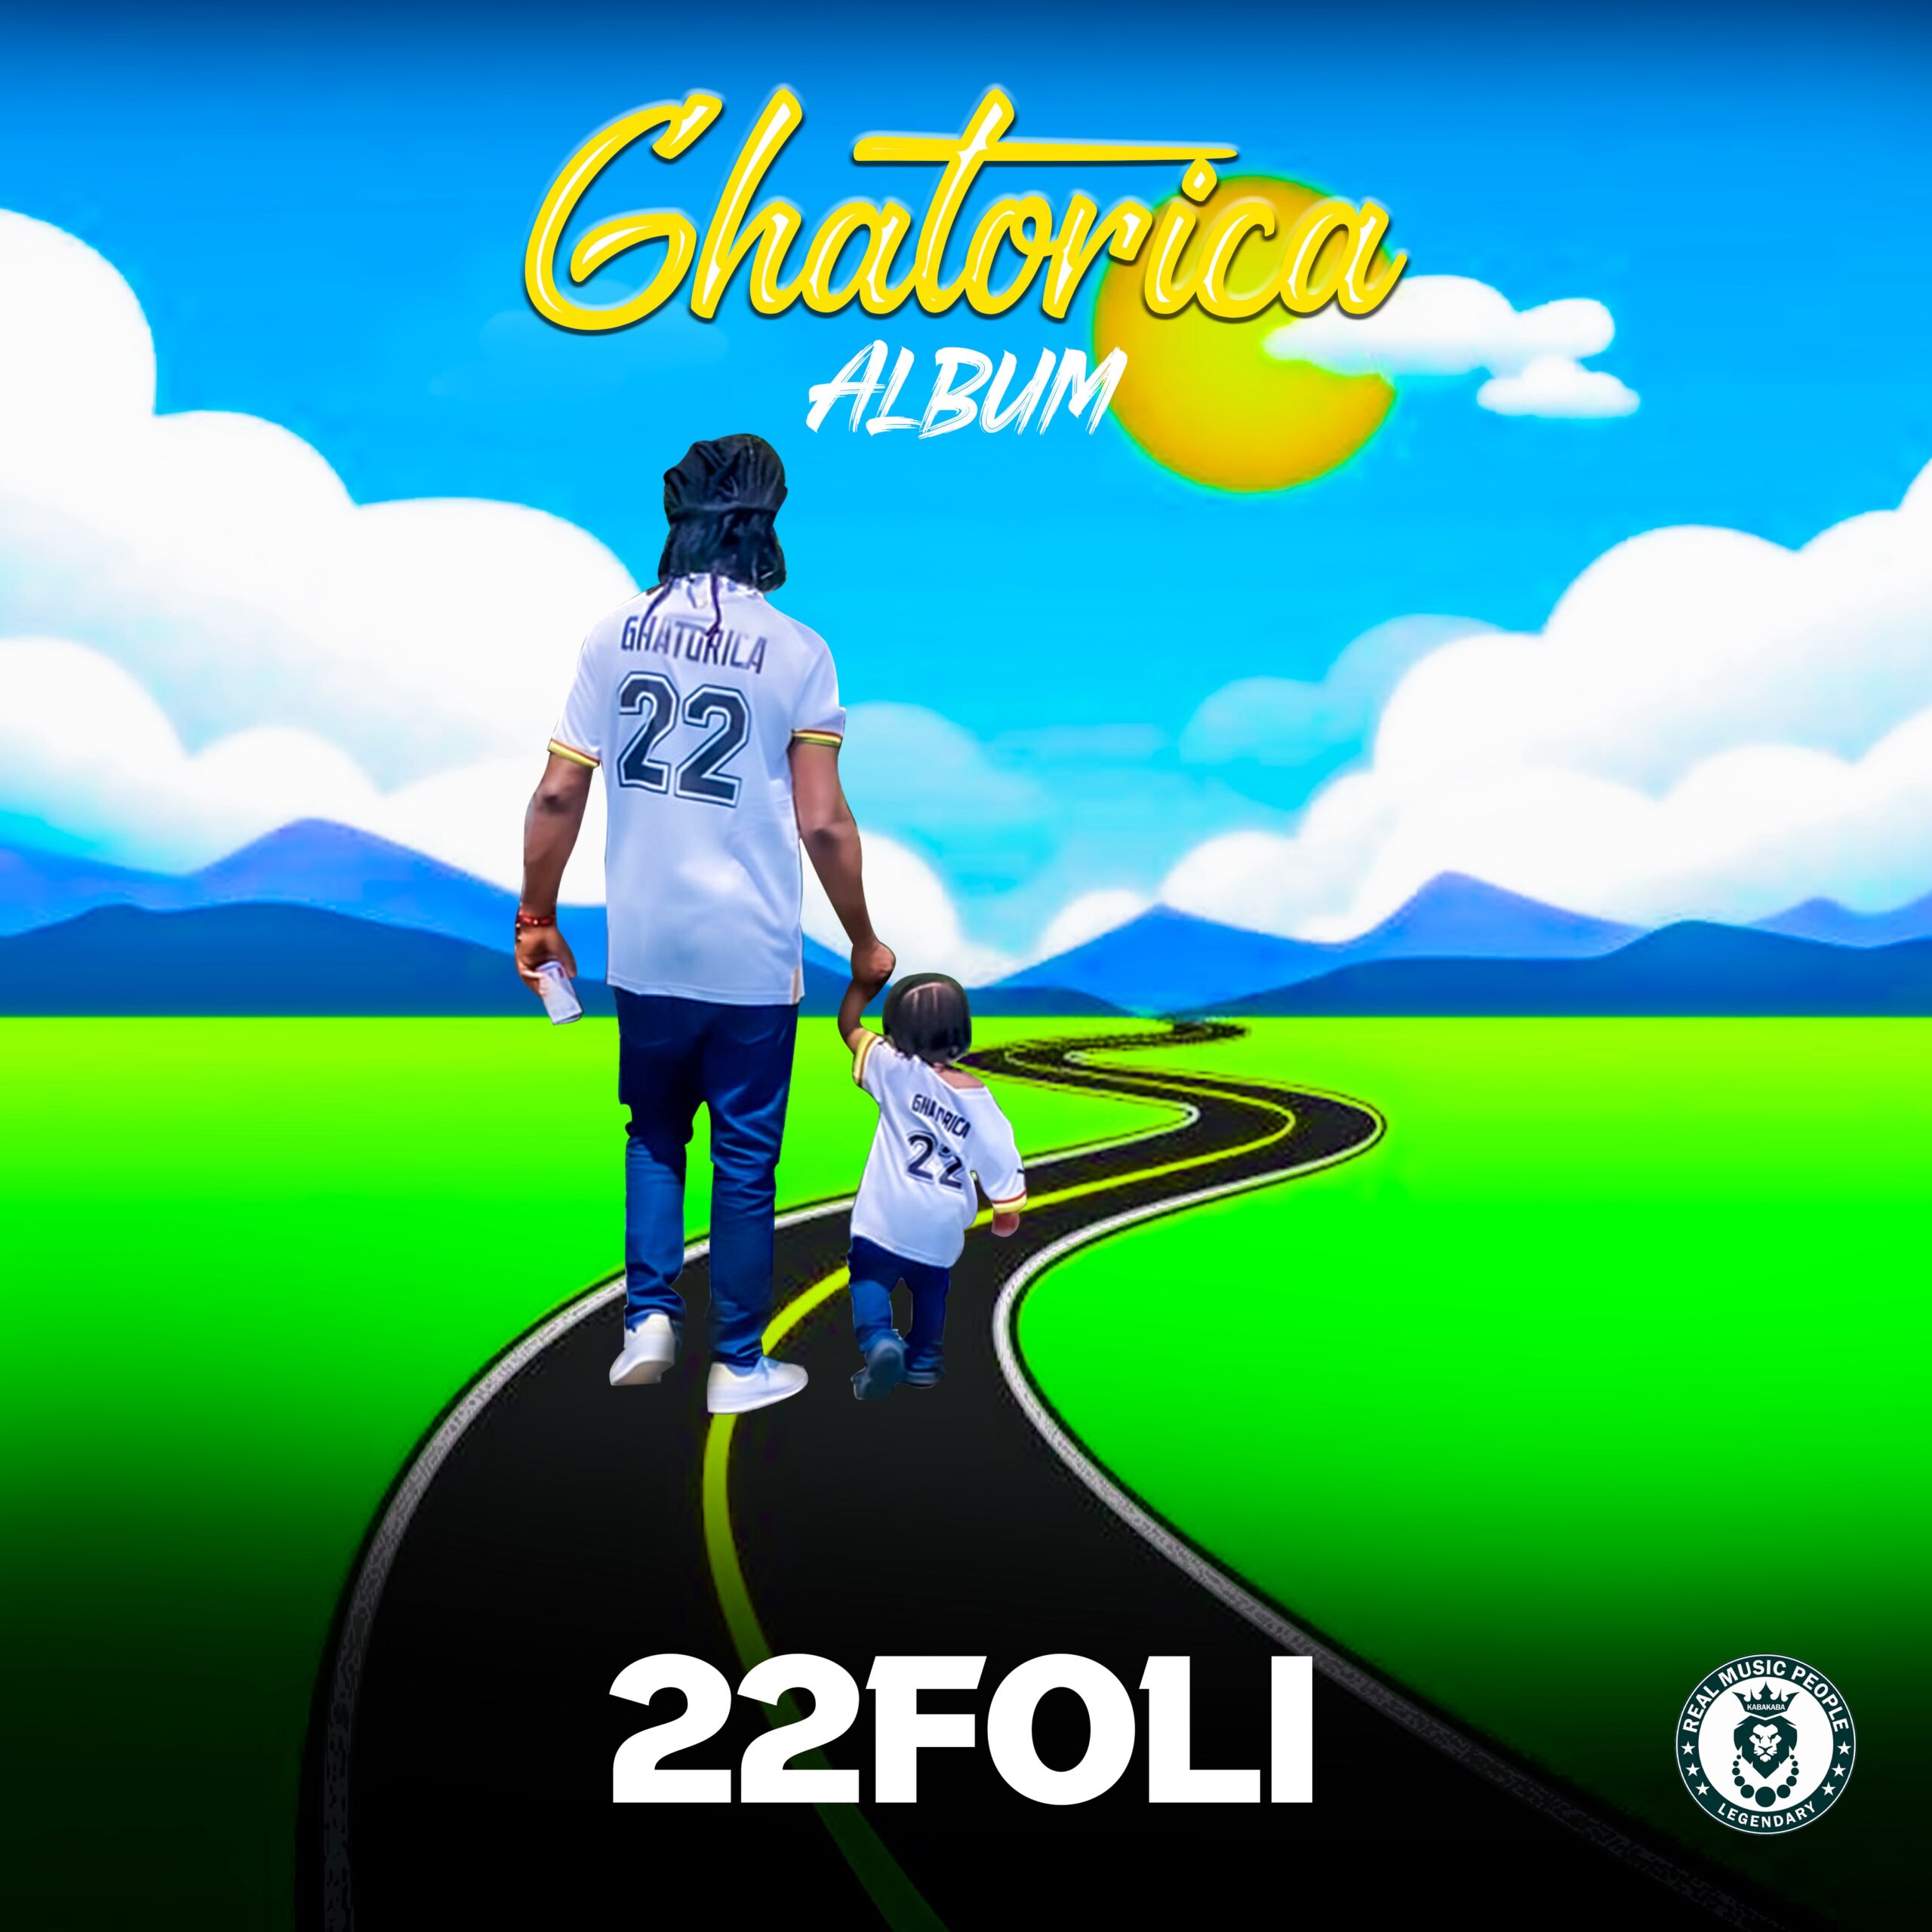 22 Foli announces debut album, “Ghatorica” set for 1st February.